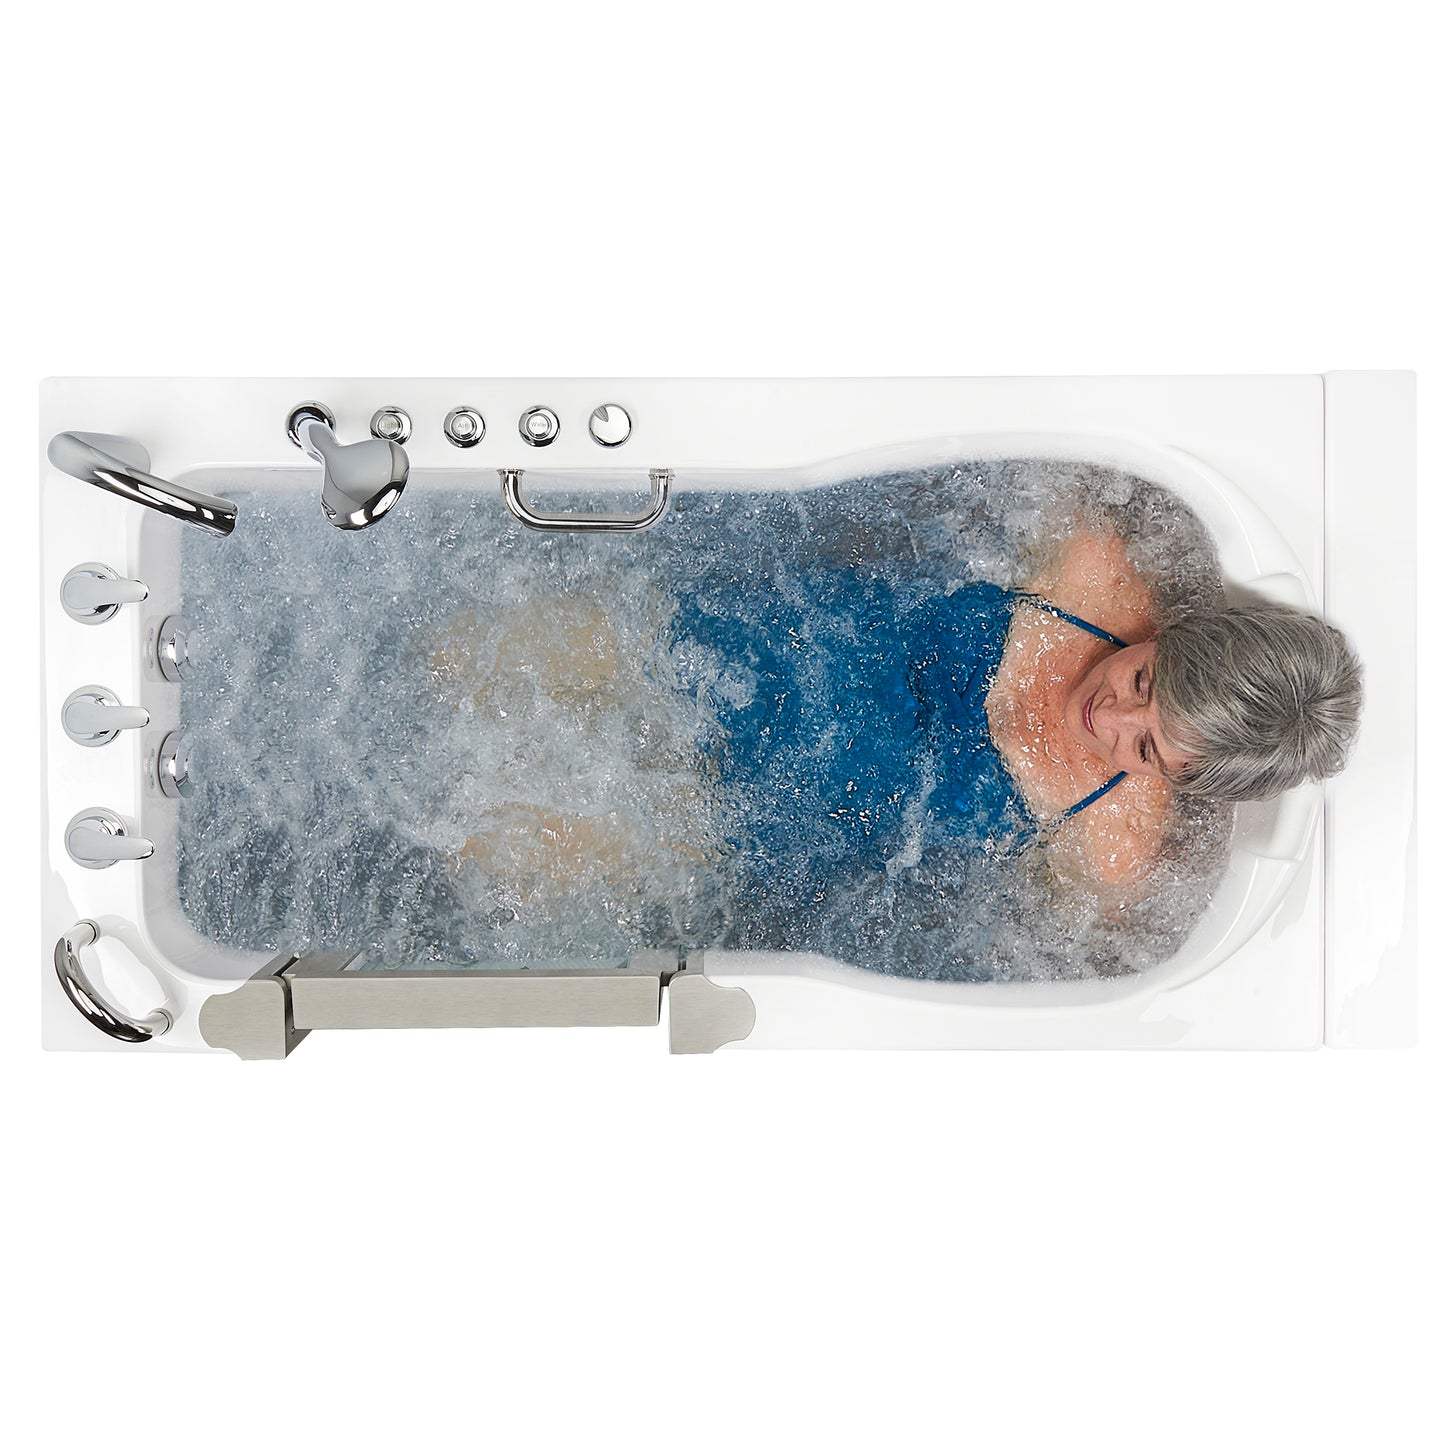 Ella’s Deluxe Acrylic Air and Hydro Massage Walk-In Bathtub